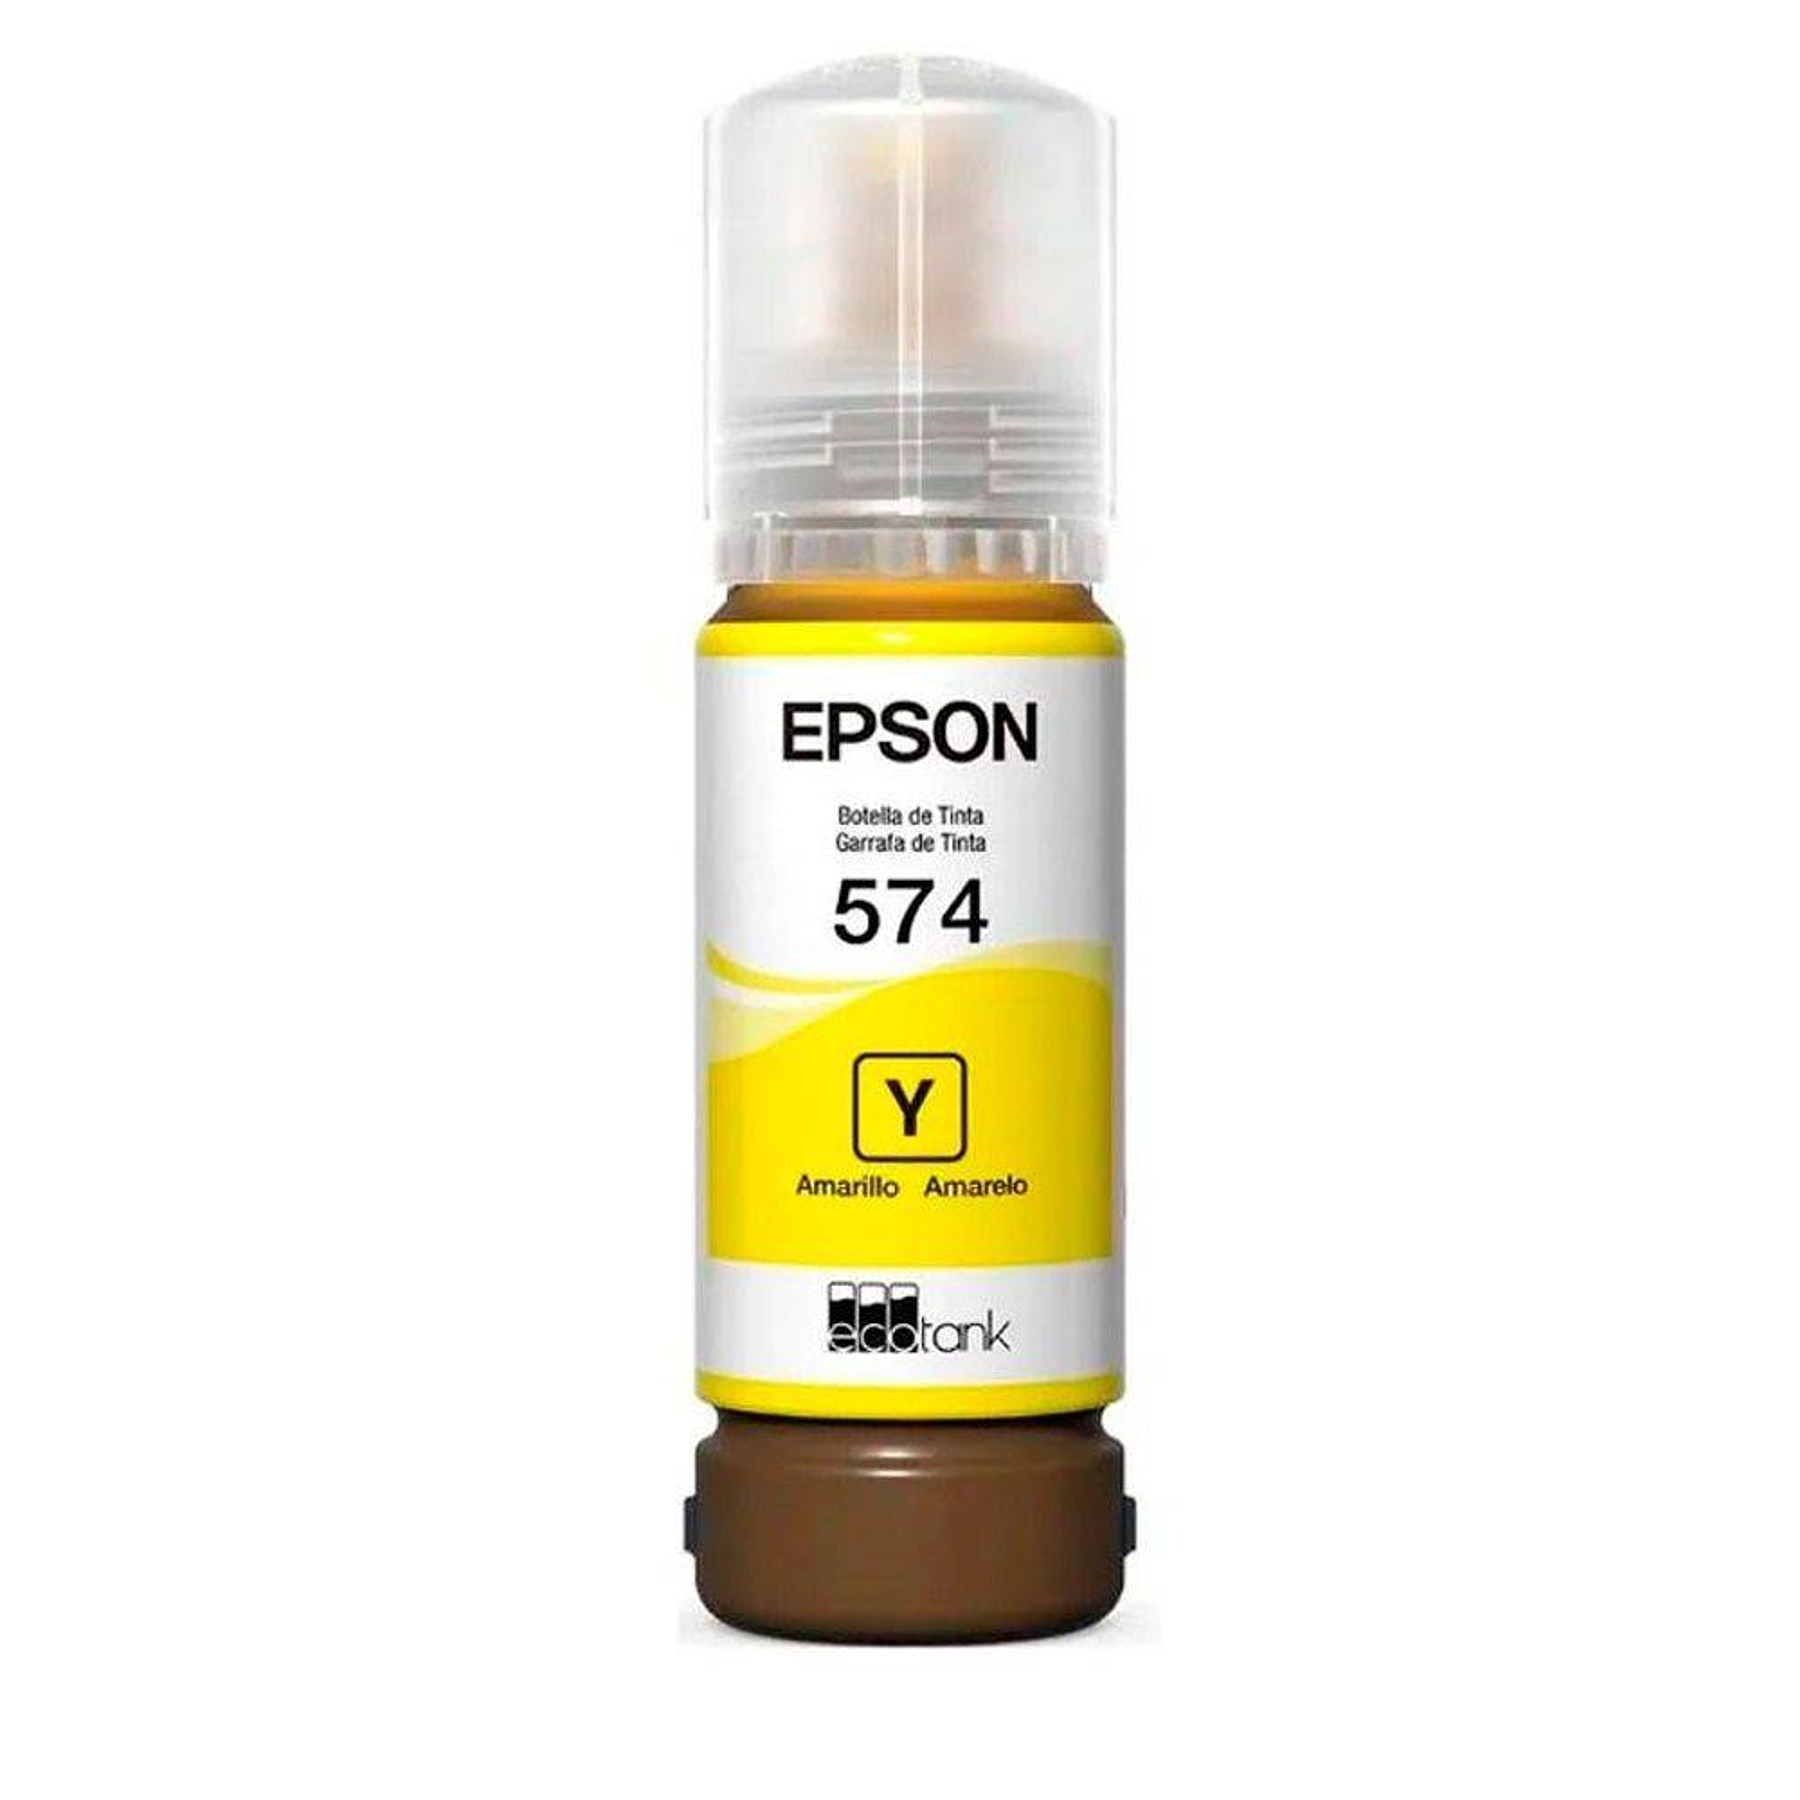 Epson T574420 Botella de Tinta Color Amarillo 